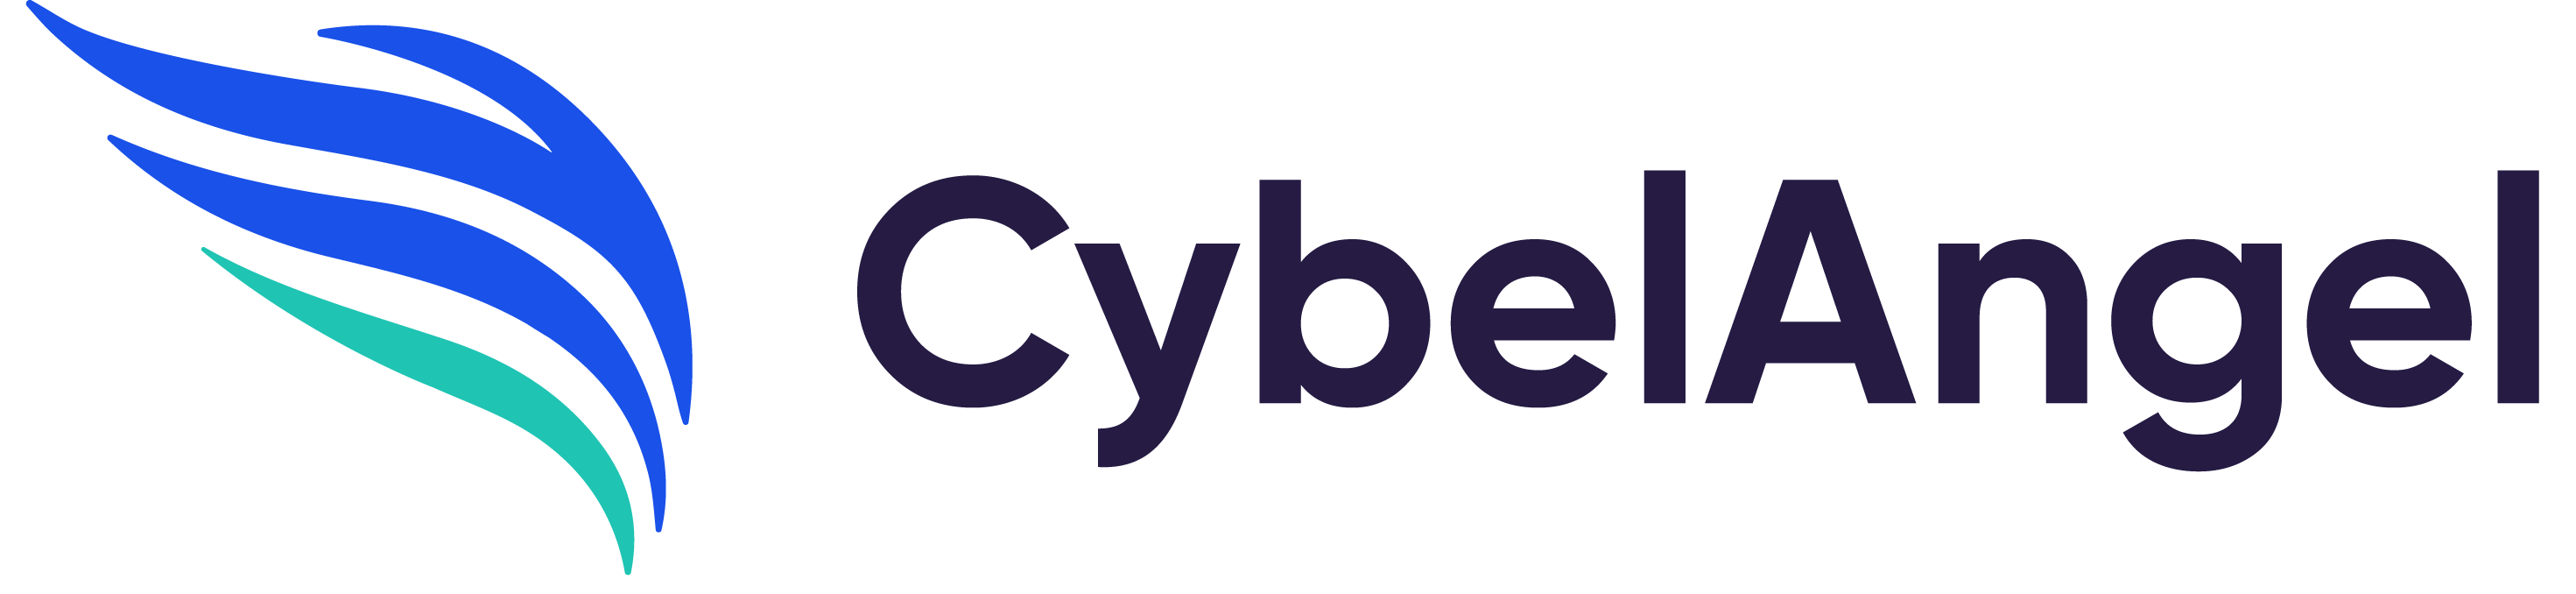 Cybelangel Logo